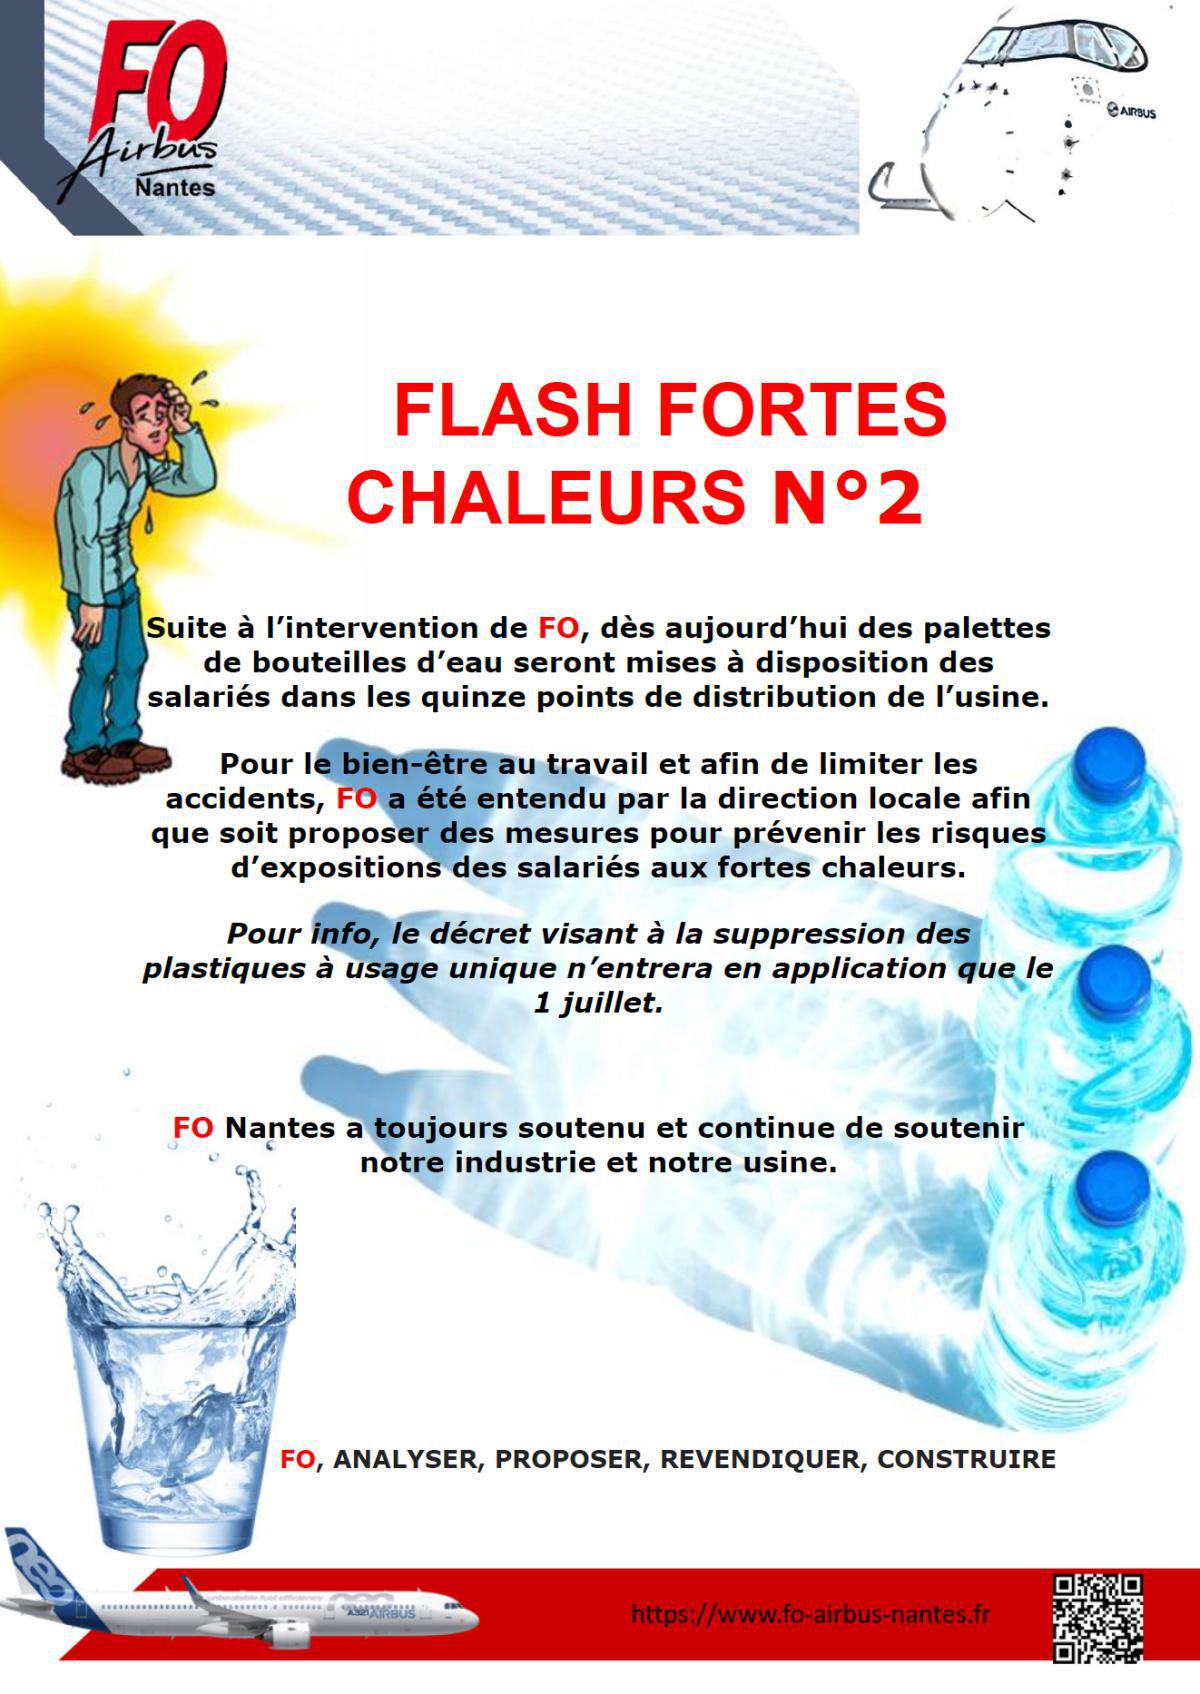 FLASH FORTES CHALEURS N°2